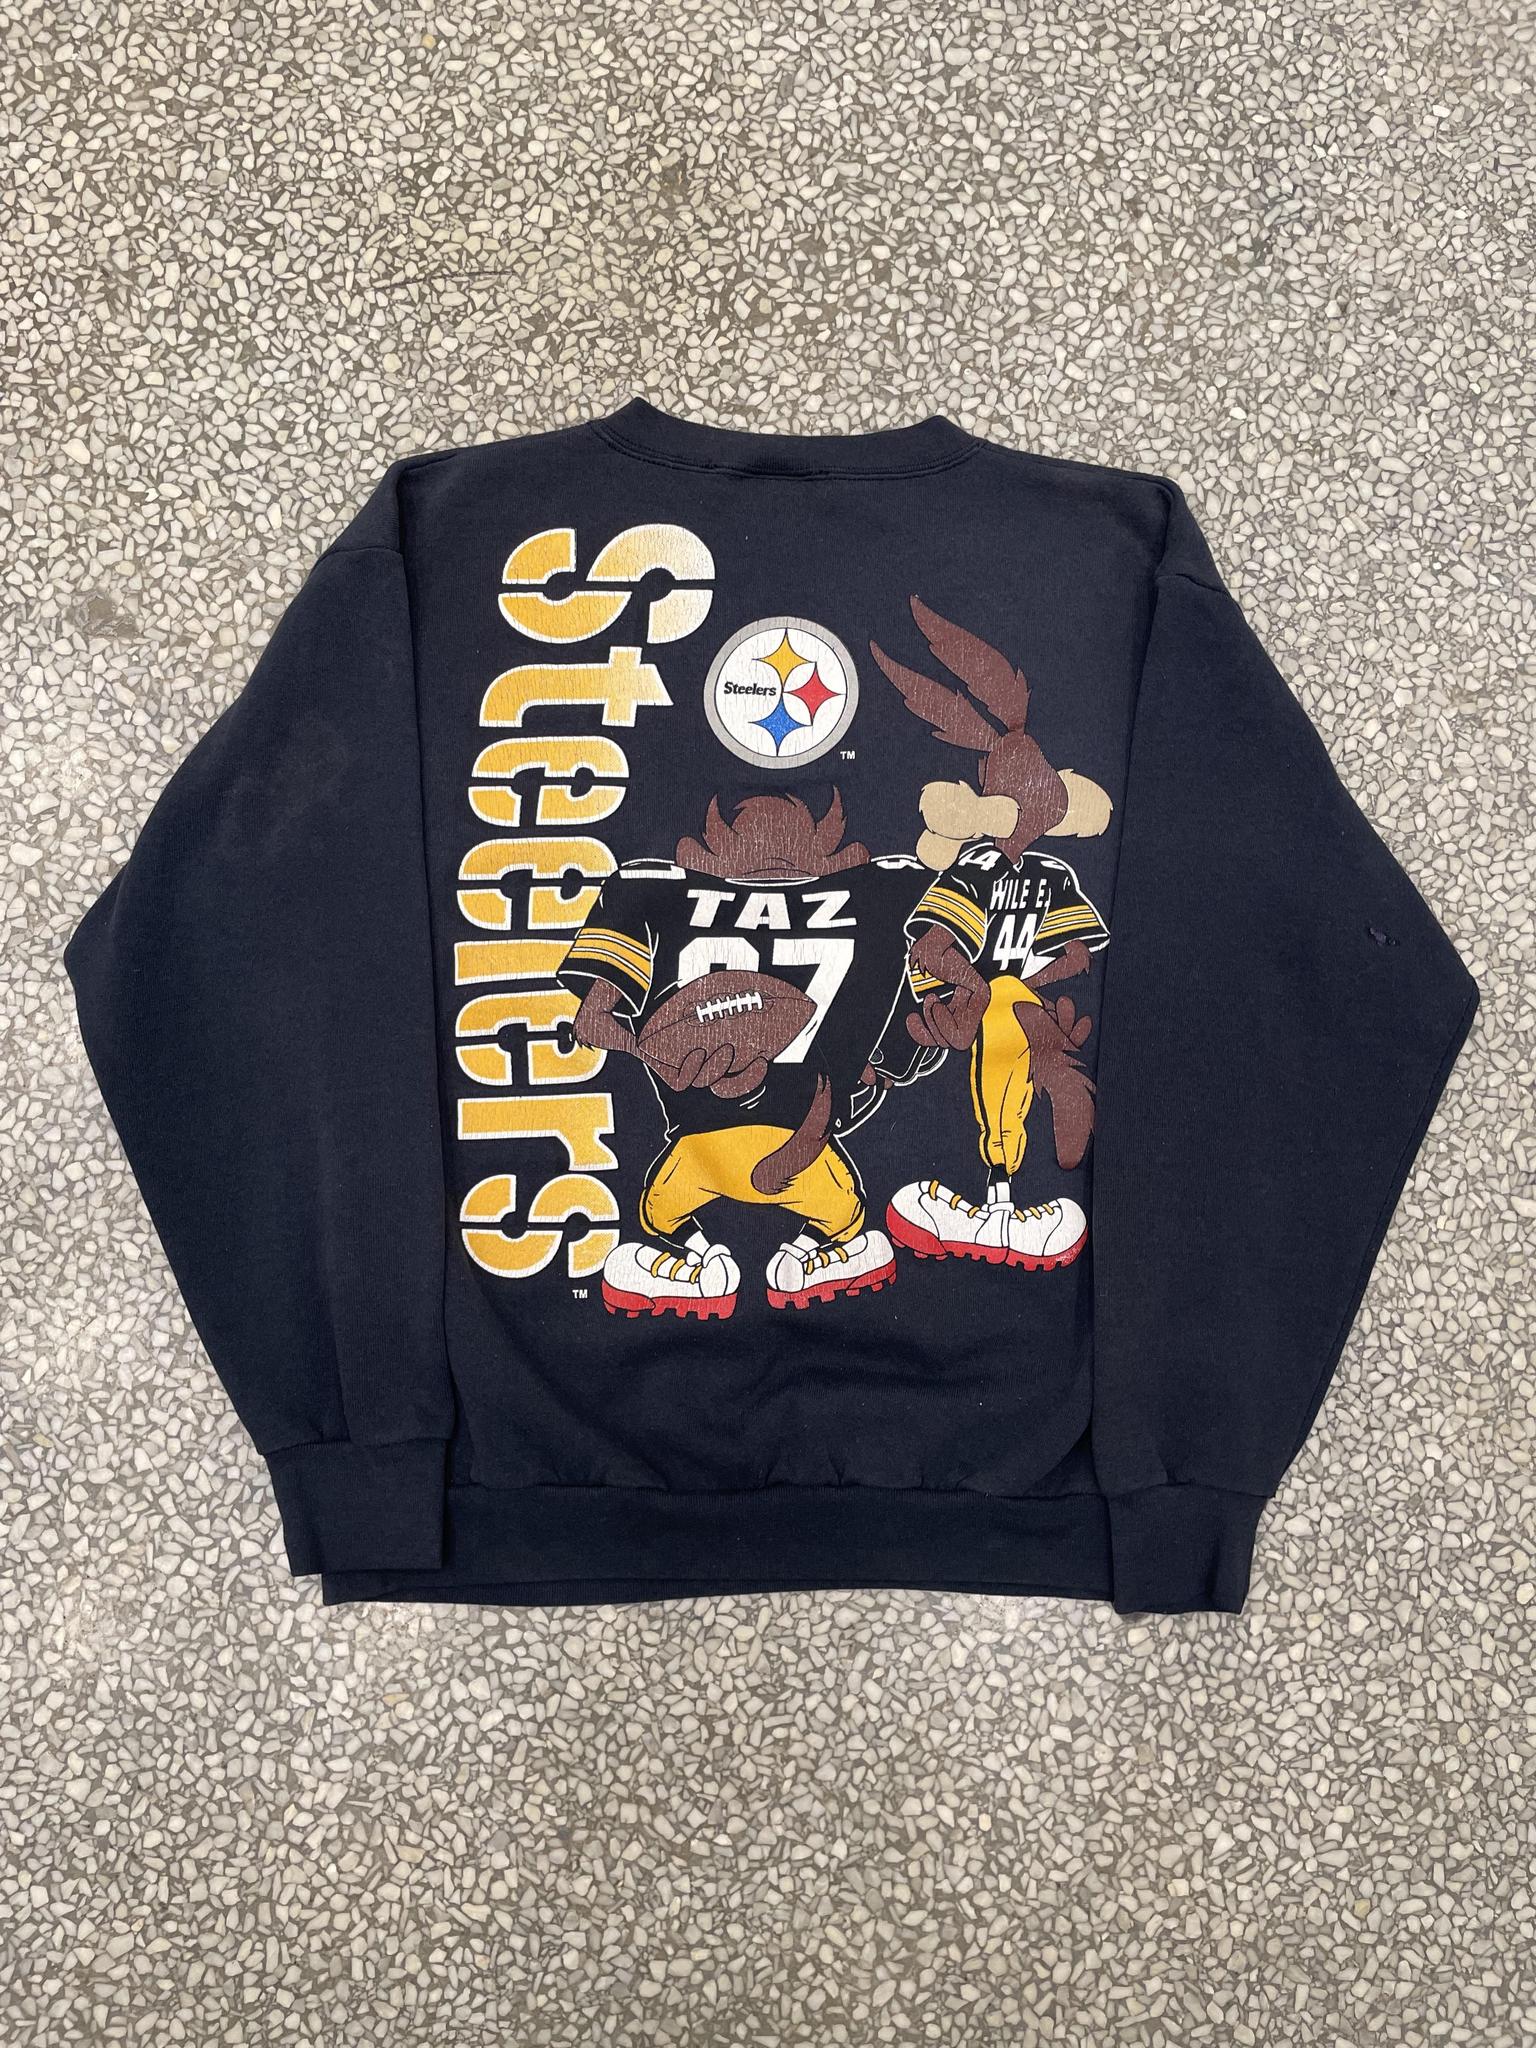 Pittsburgh Steelers Vintage 1994 Taz Crewneck Black – ABC Vintage